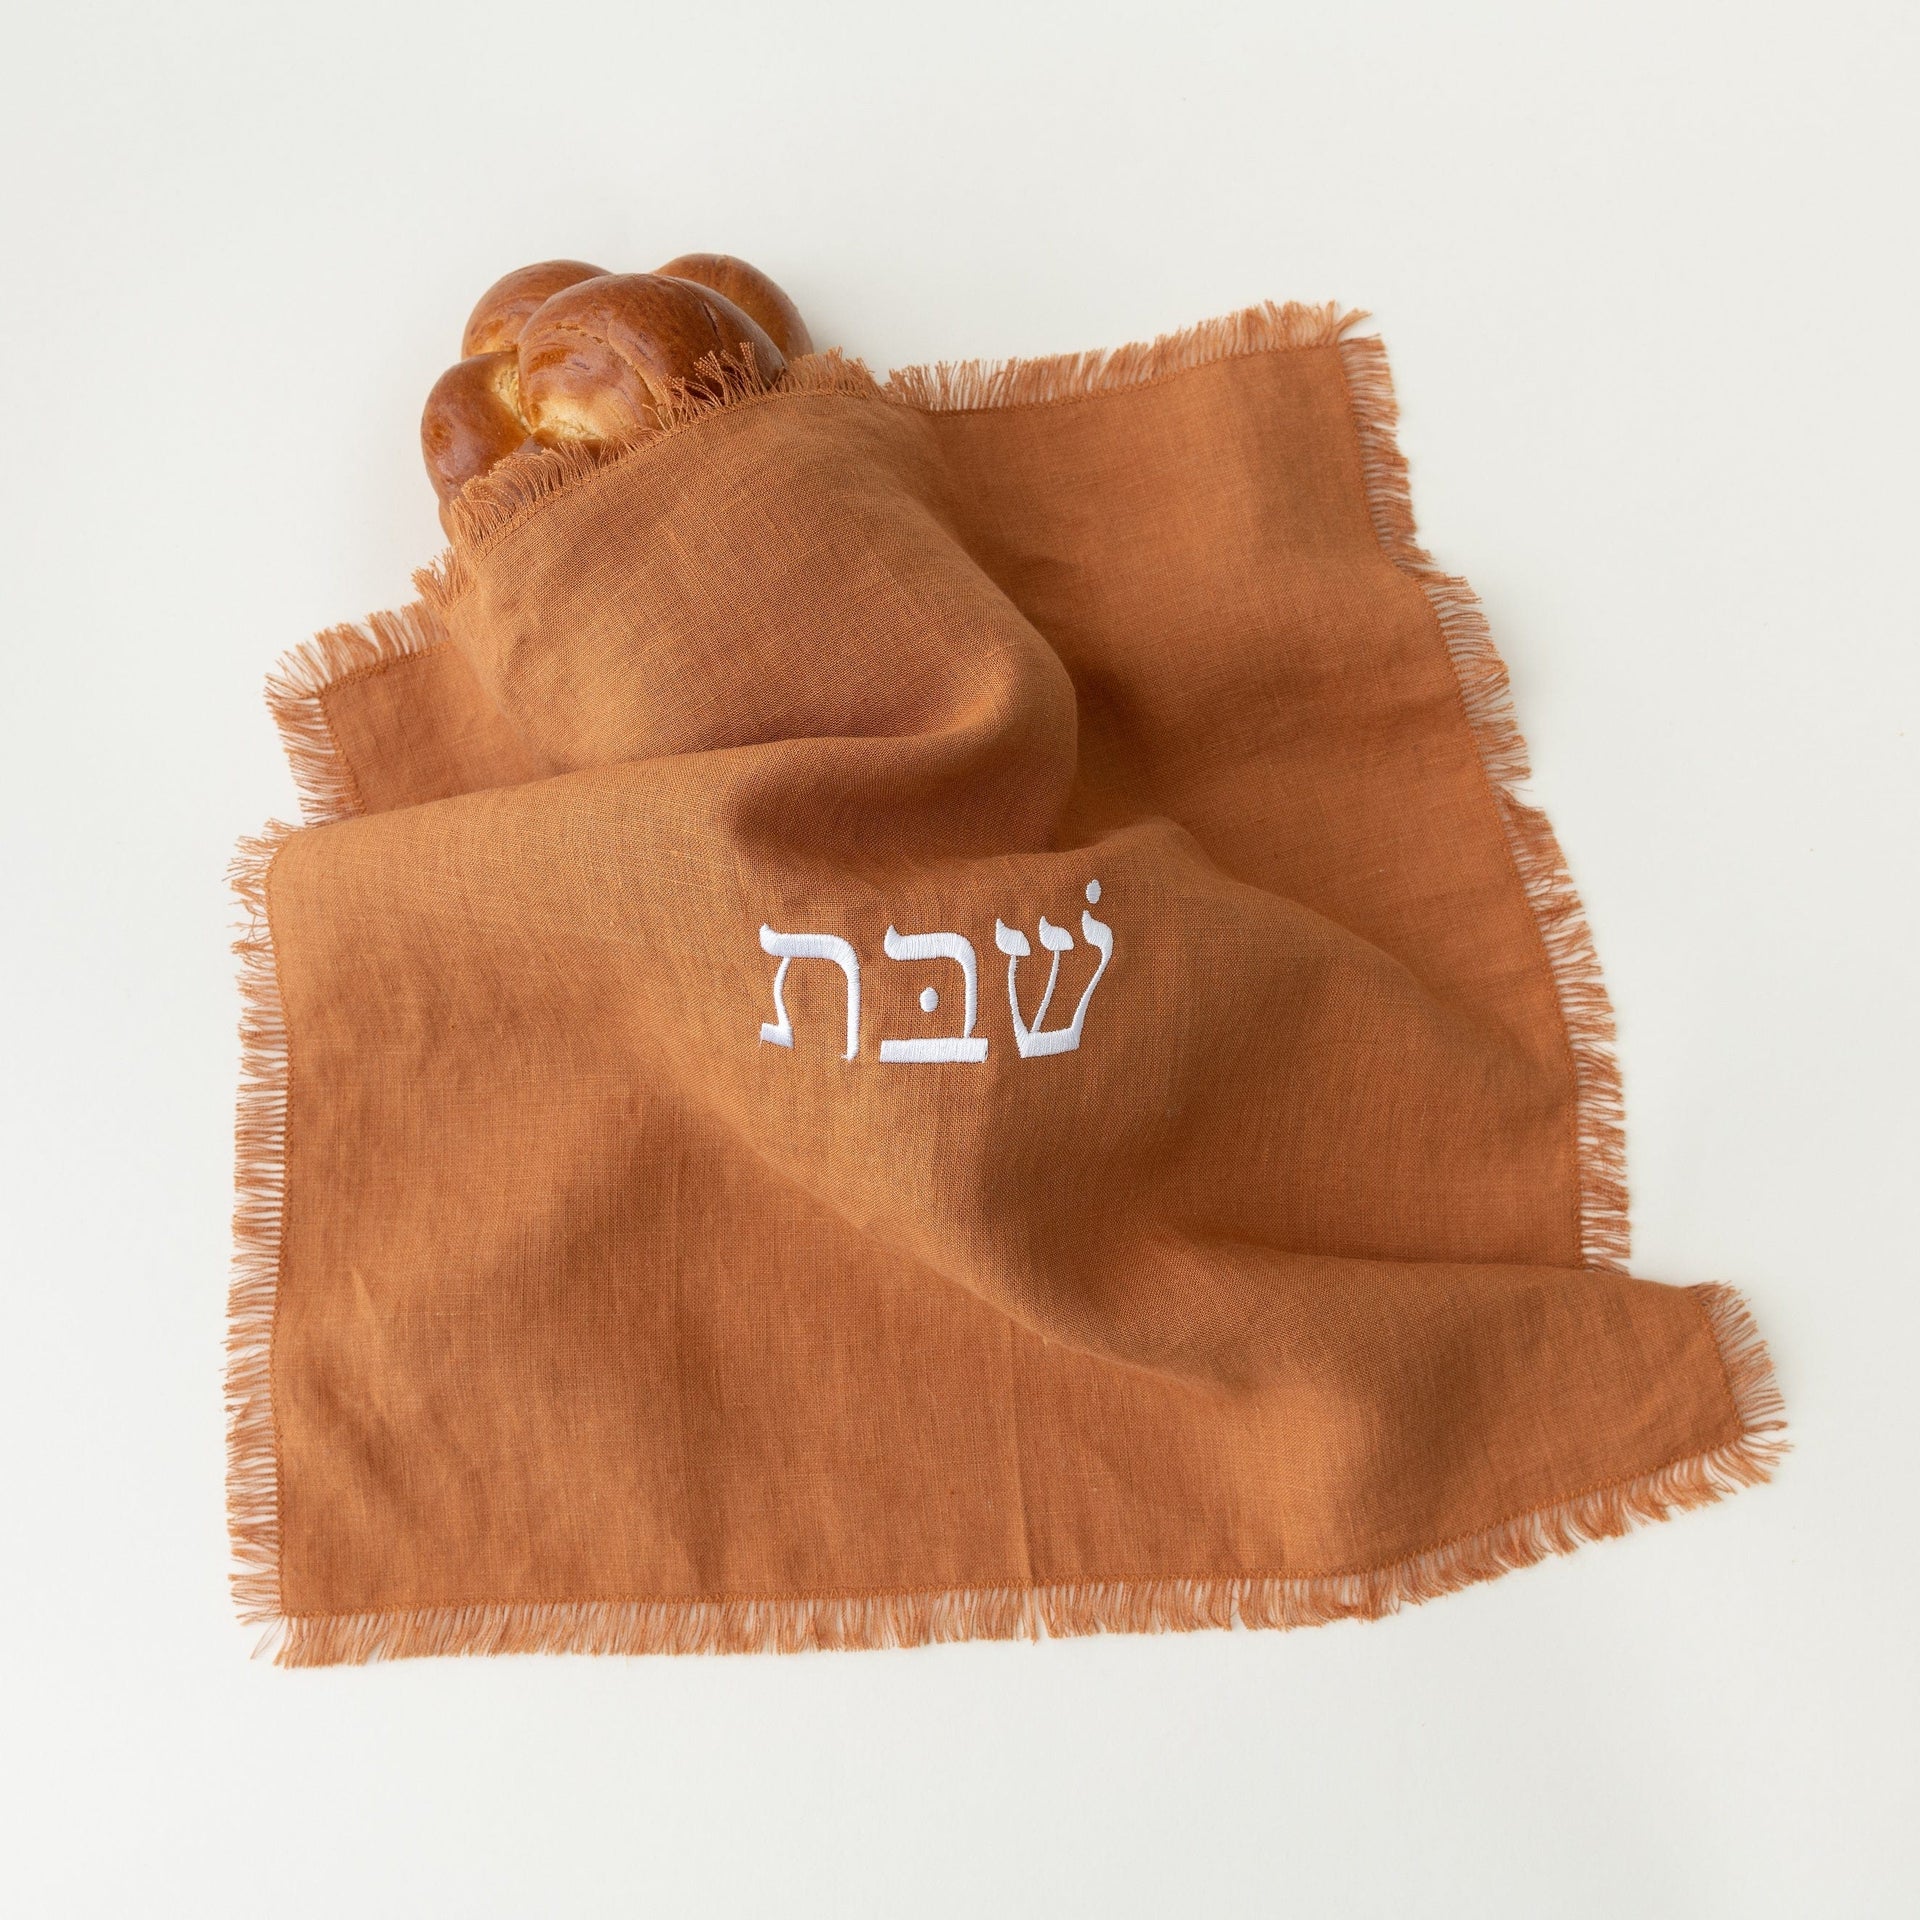 Oneg Challah Covers Embroidered Linen Challah Cover - Cinnamon